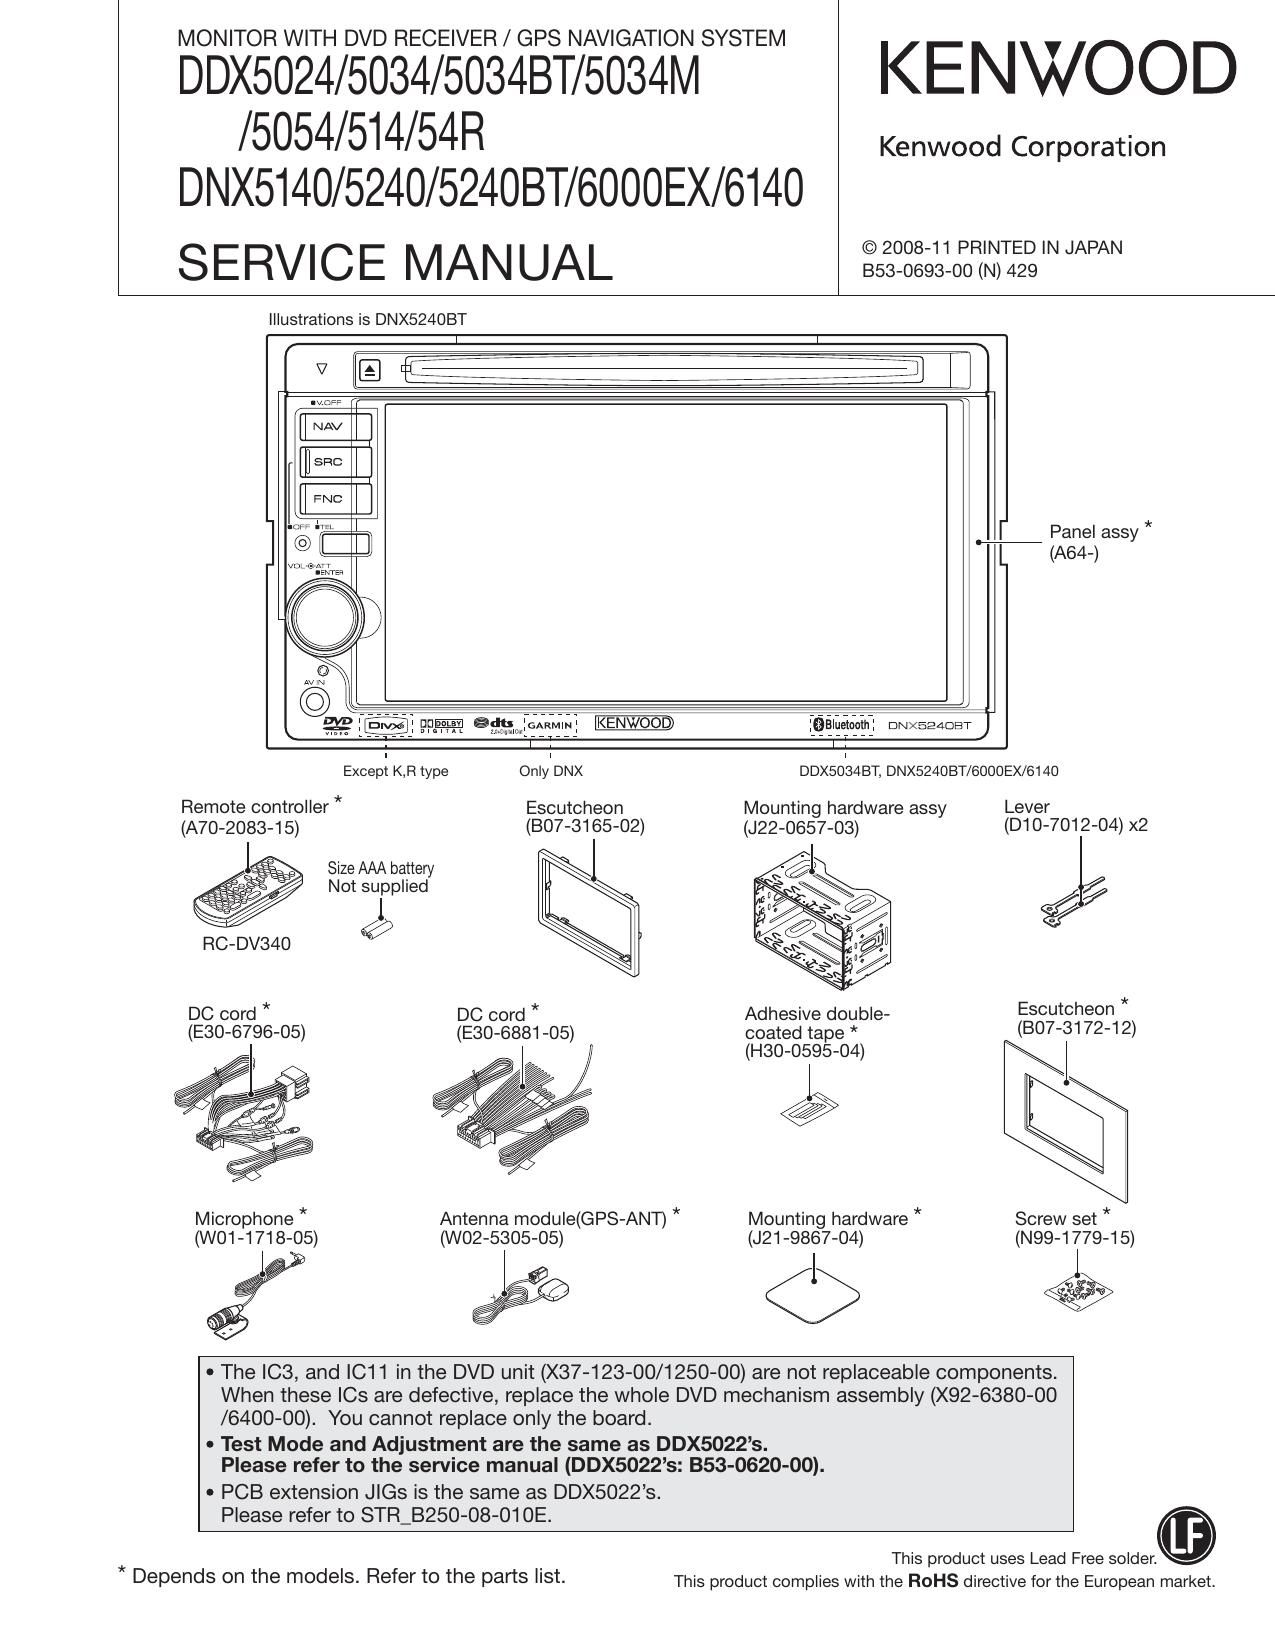 Kenwood DDX 5034 BT HU Service Manual